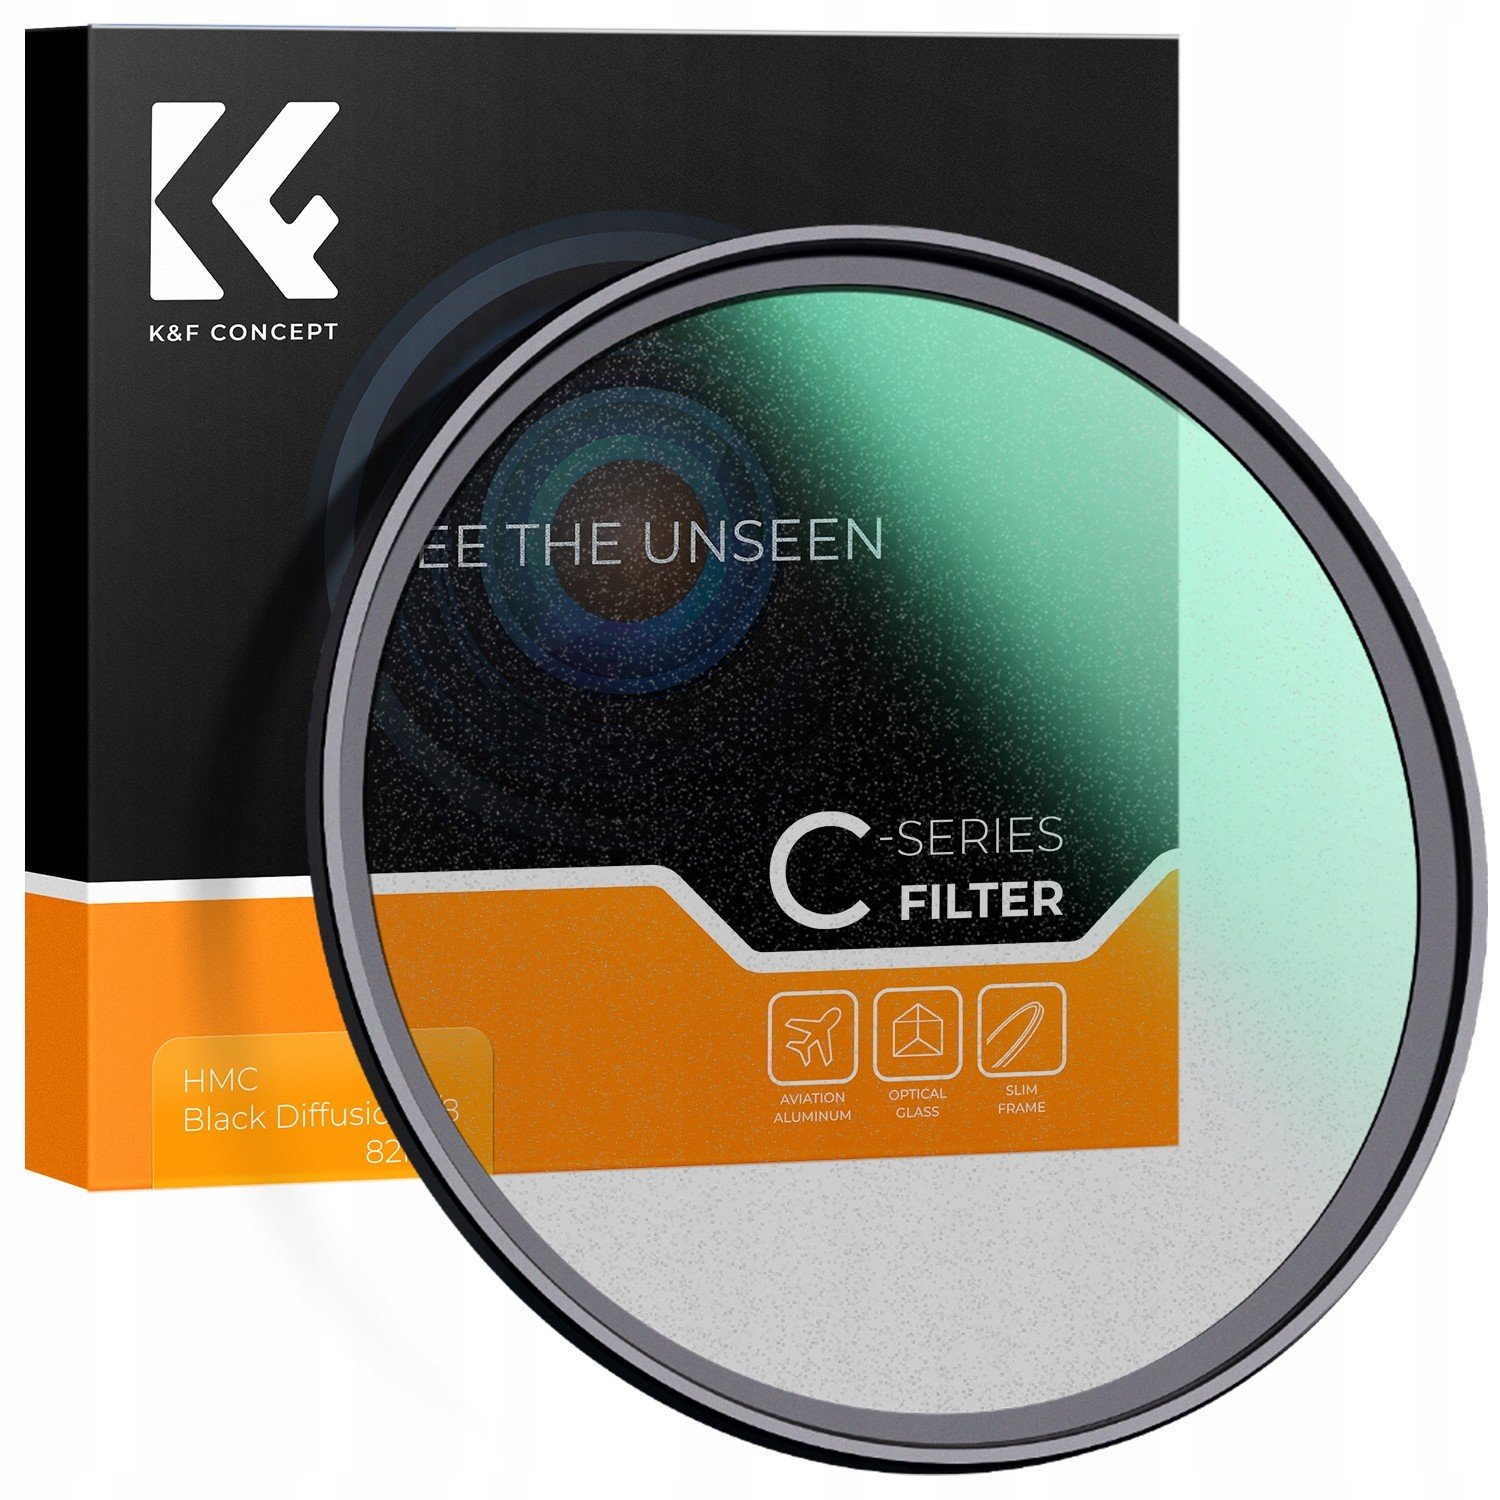 Difuzní filtr Black Mist 1/8 58mm Nano-C K&f